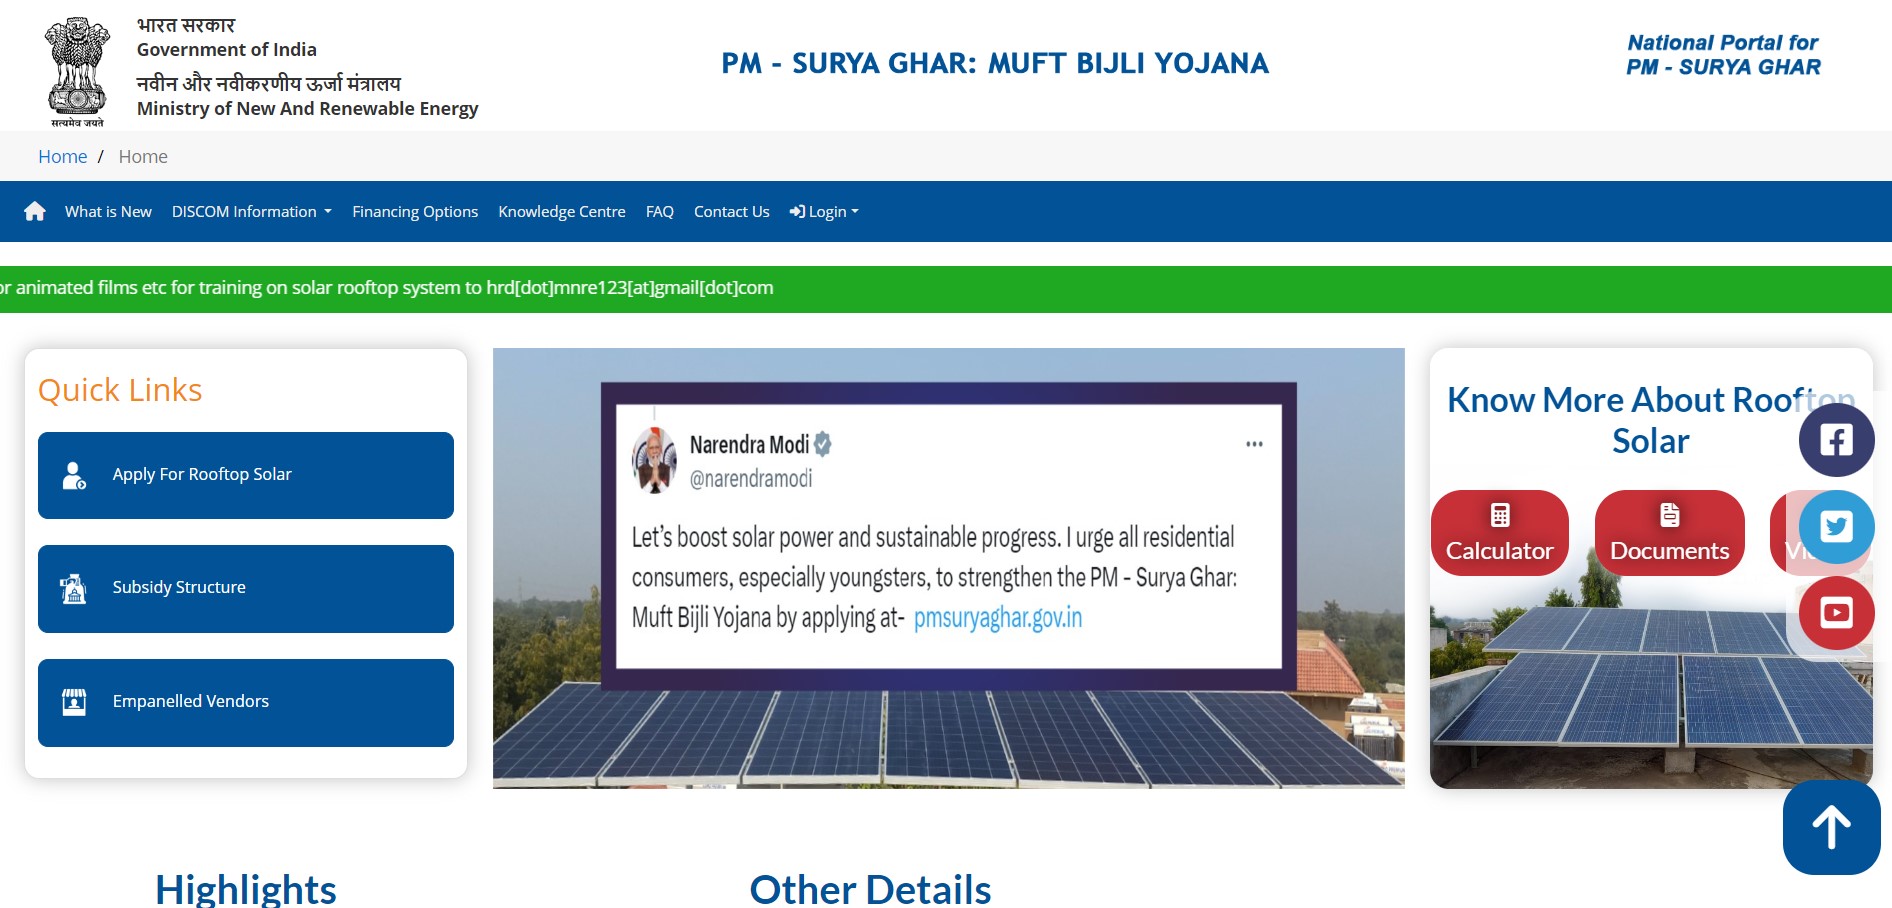 Govt approves PM-Surya Ghar: Muft Bijli Yojana for installing rooftop solar systems - GK Now